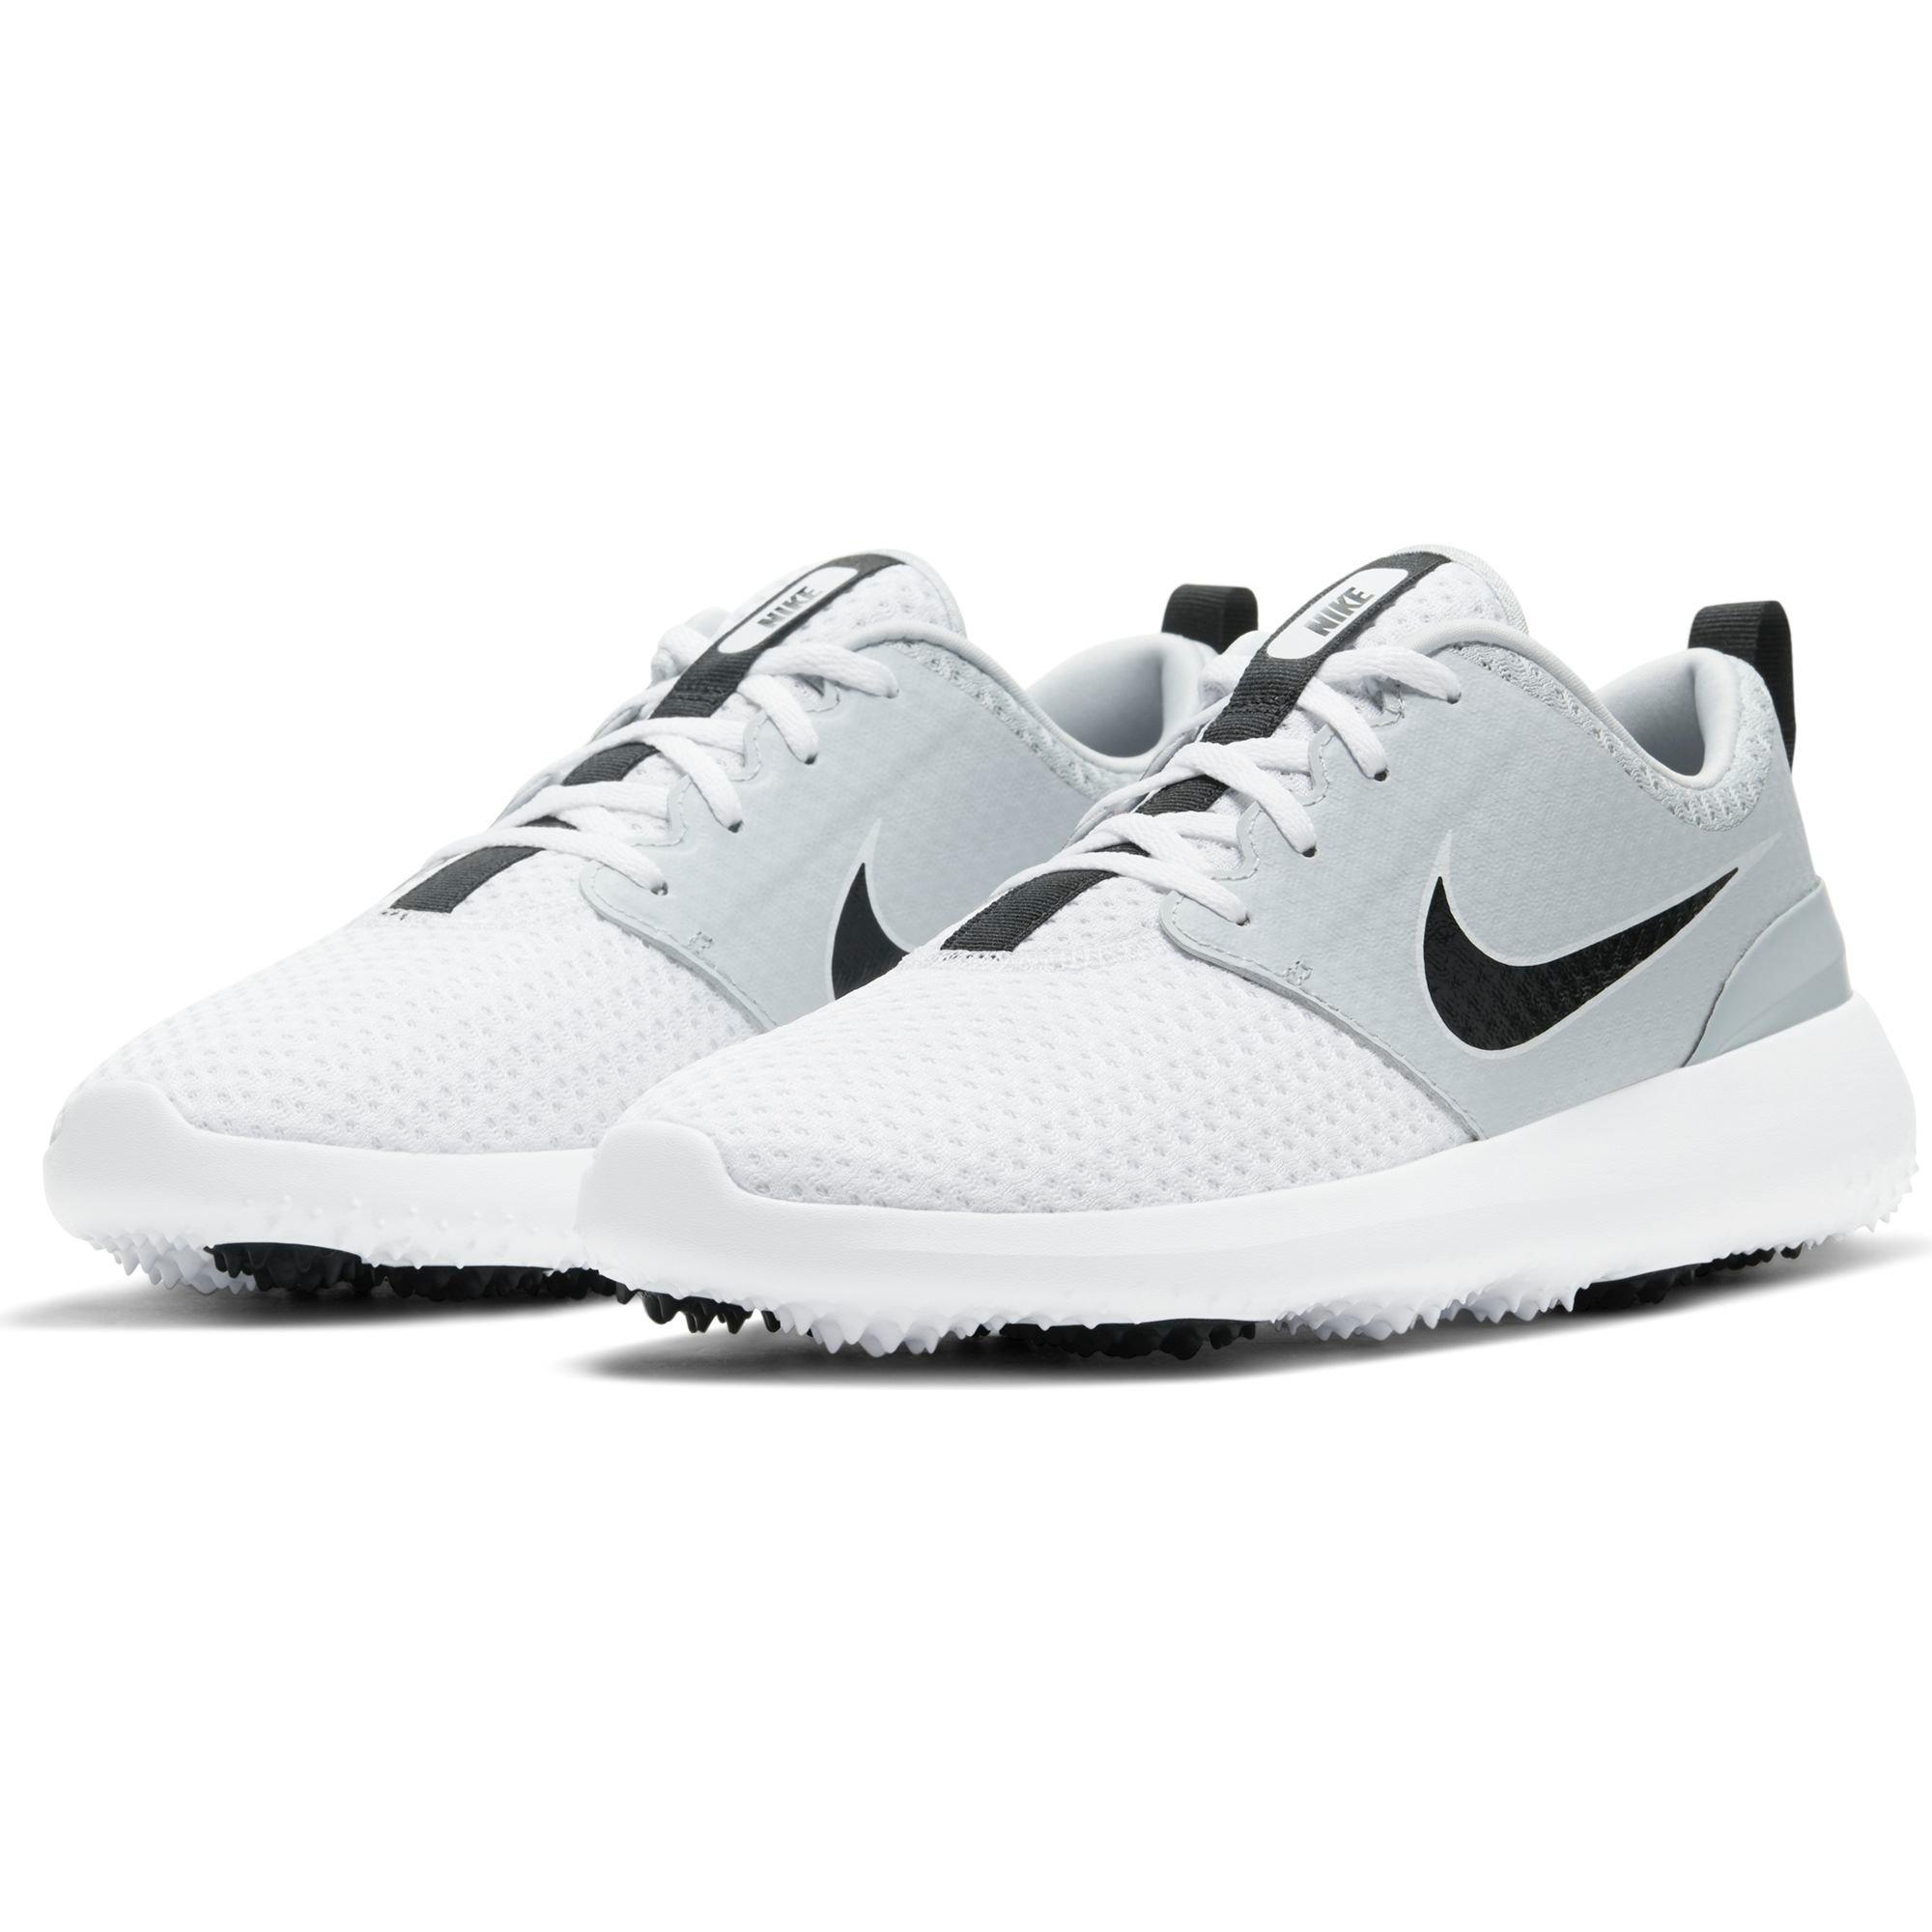 Nike Roshe "White/Grey" Unisex Golf Shoe